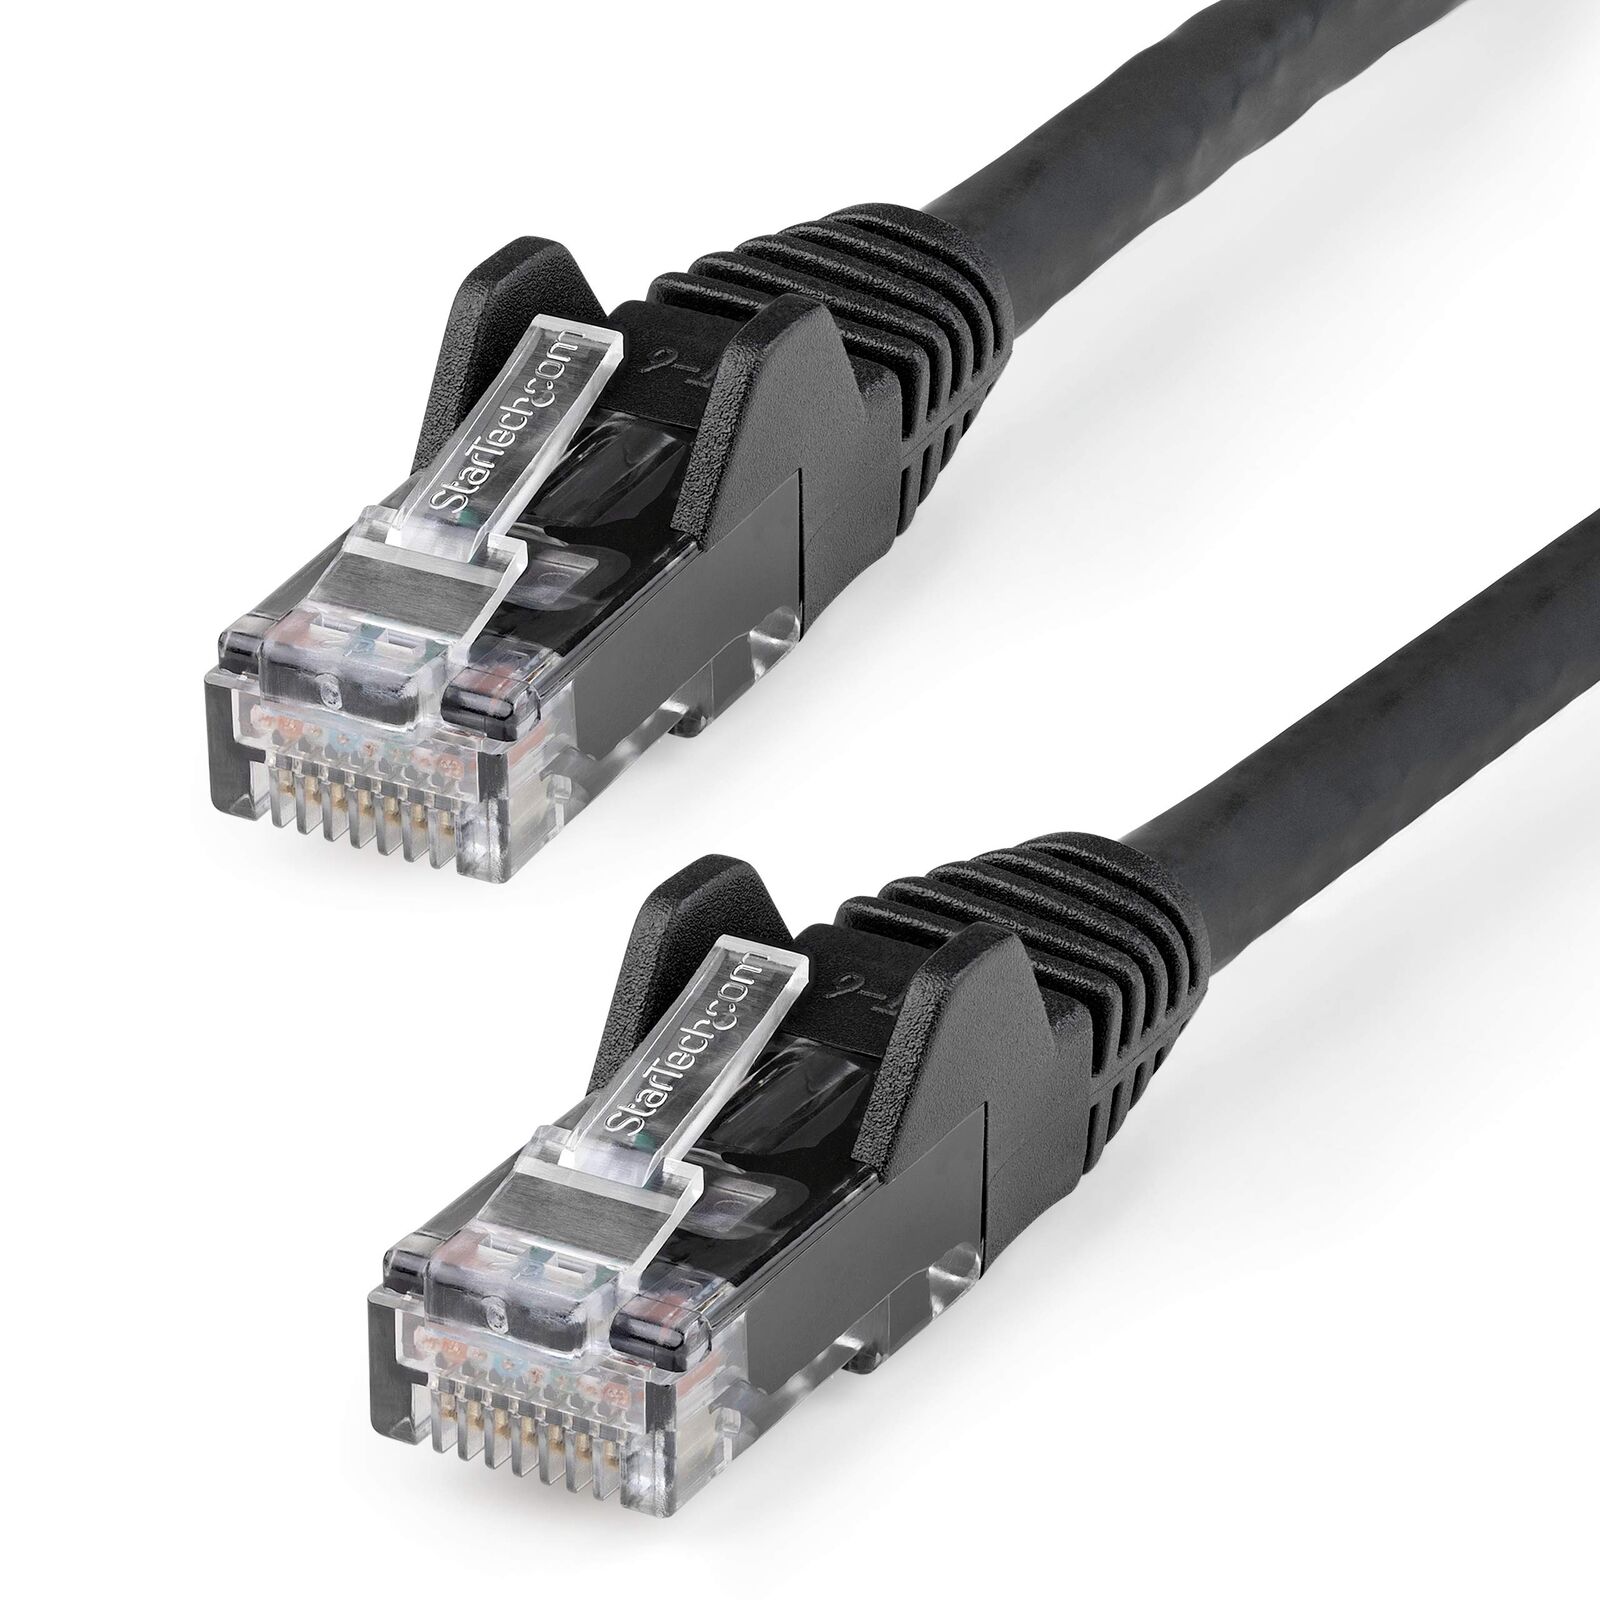 StarTech.com 10ft CAT6 Ethernet Cable - Black CAT 6 Gigabit Ethernet Wire -65...